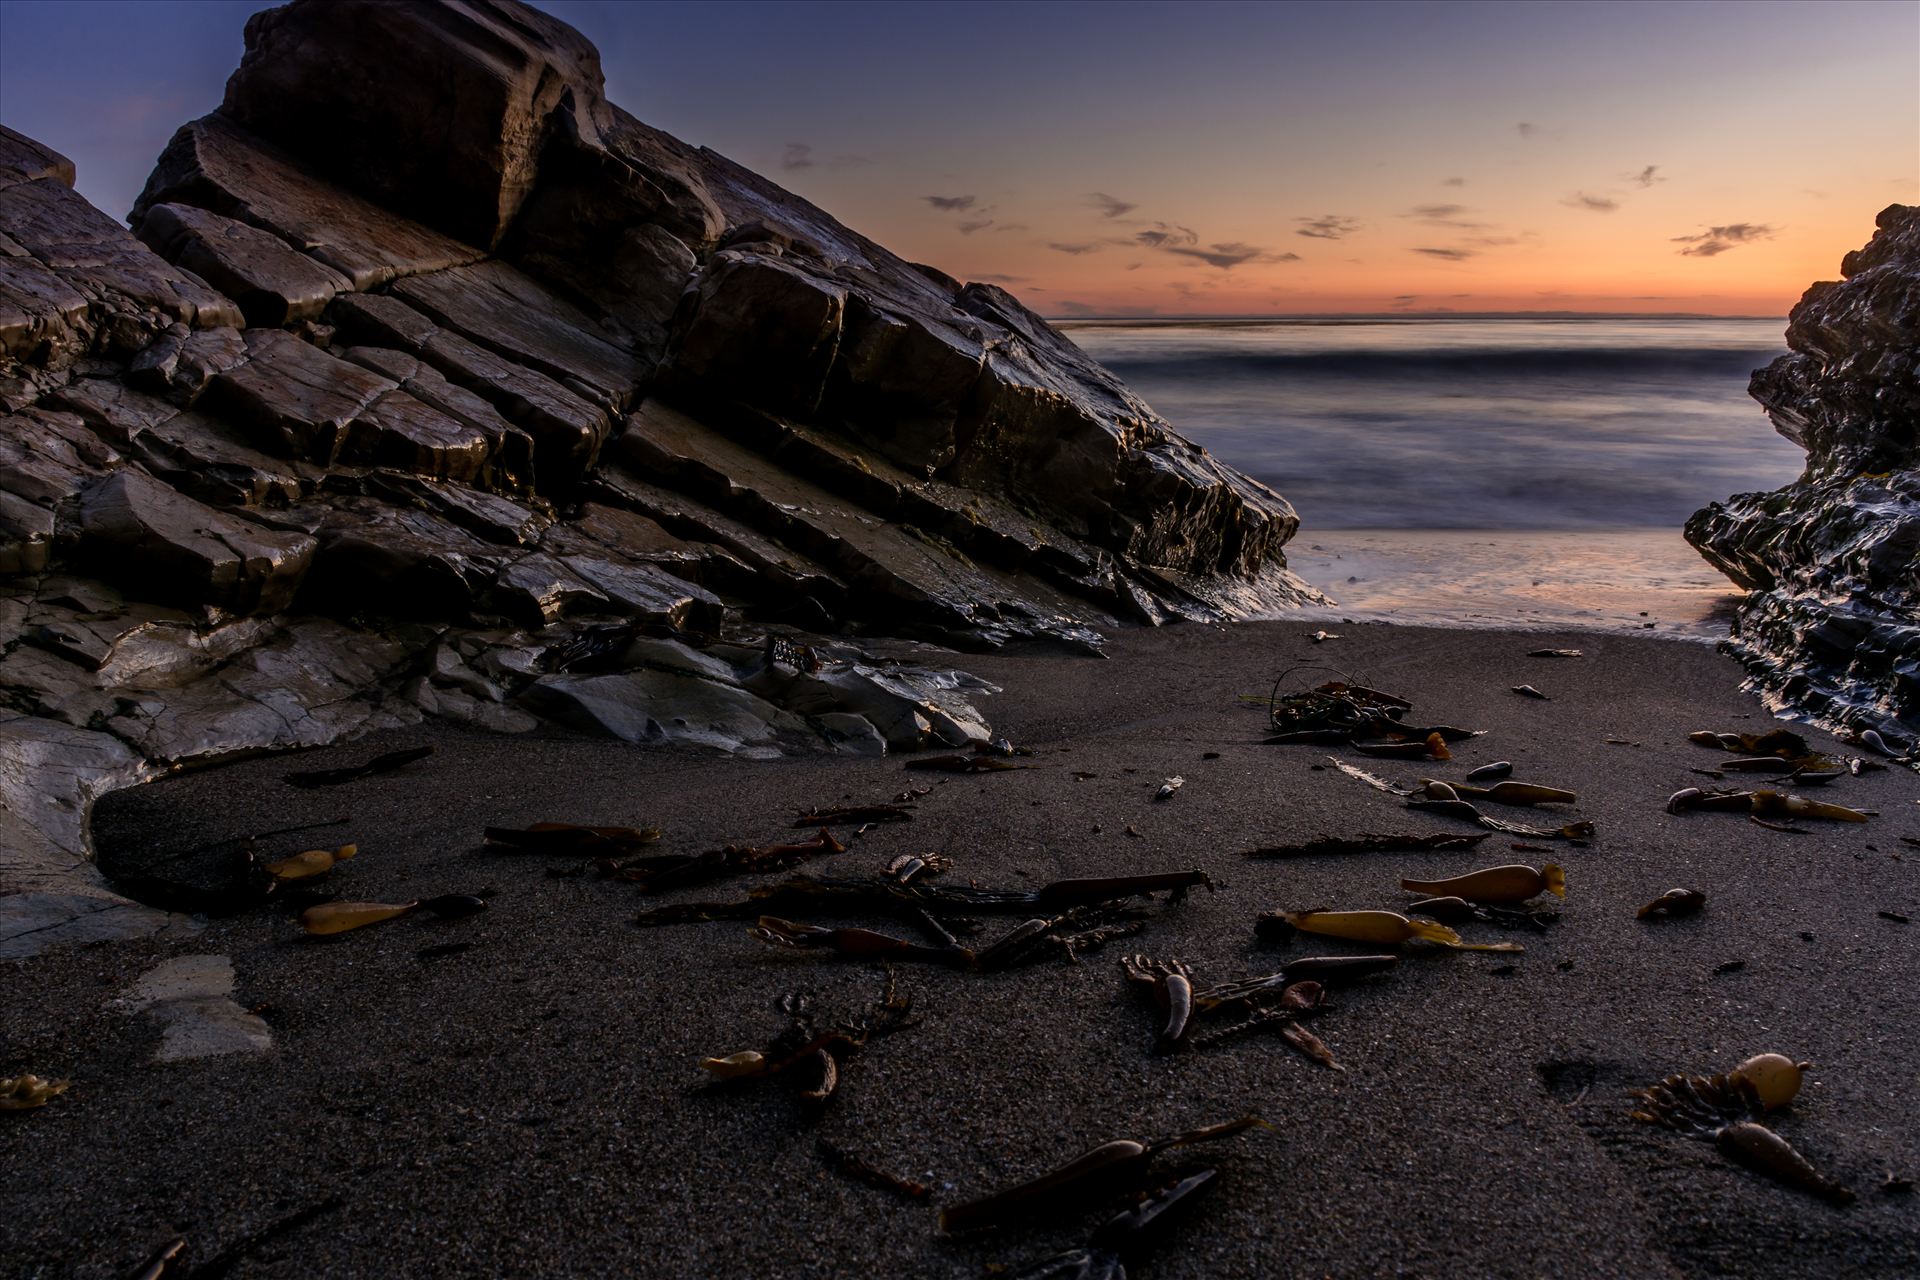 Soft Sea and Rocks.jpg Highway 1 Ocean Sunset in Pismo Beach, California by Sarah Williams